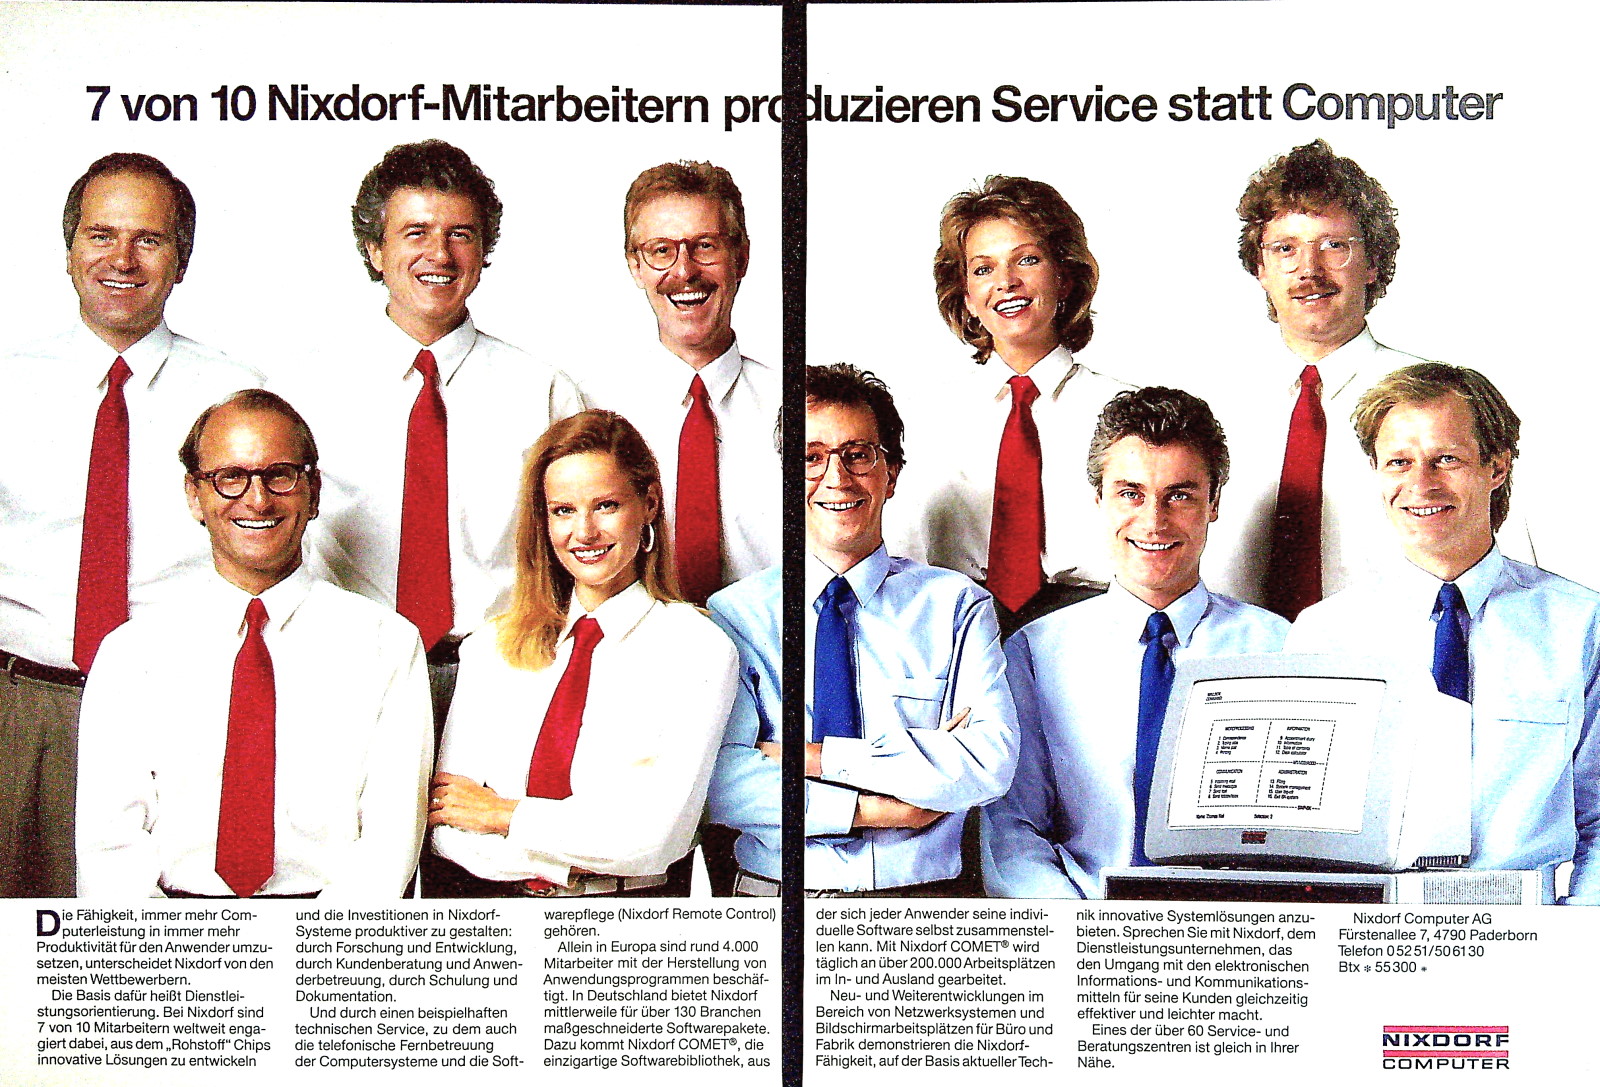 1987 Nixdorf